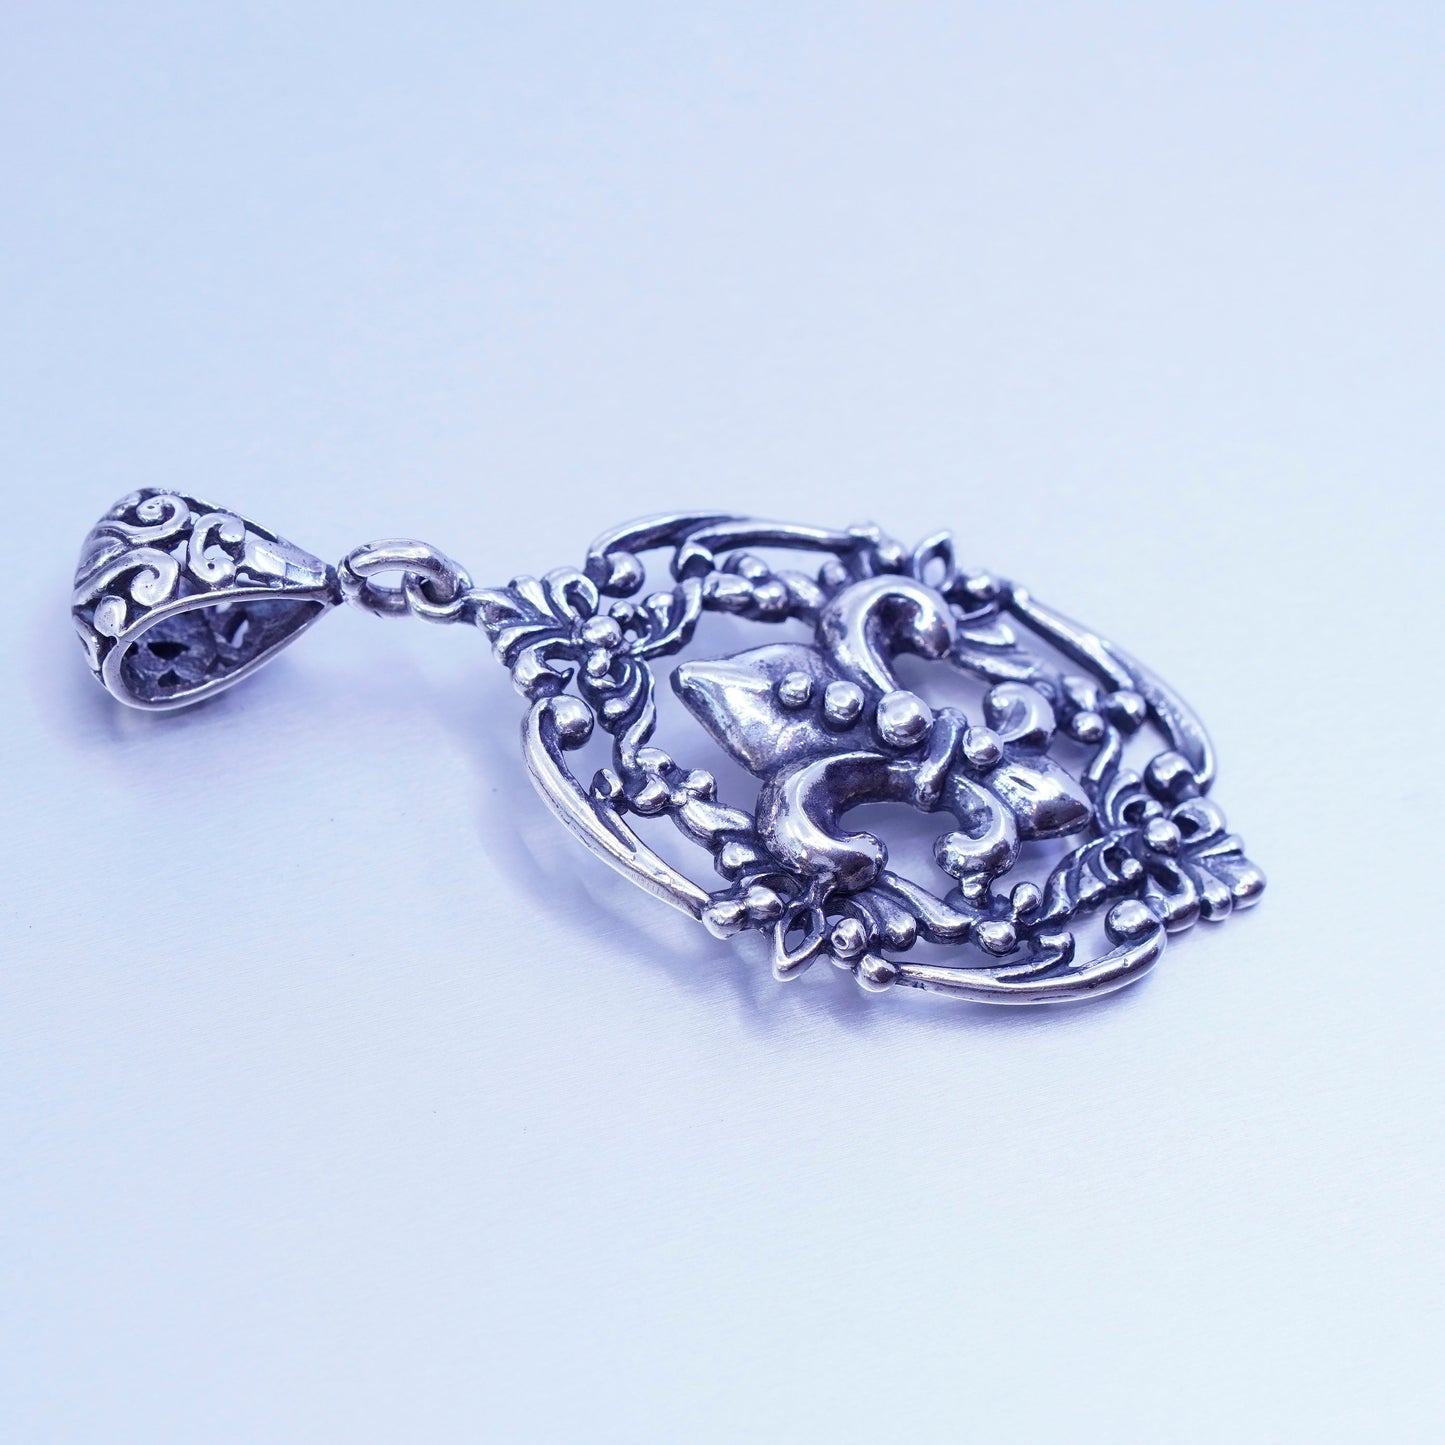 French symbol sterling 925 silver handmade filigree the fleur-de-lis pendant